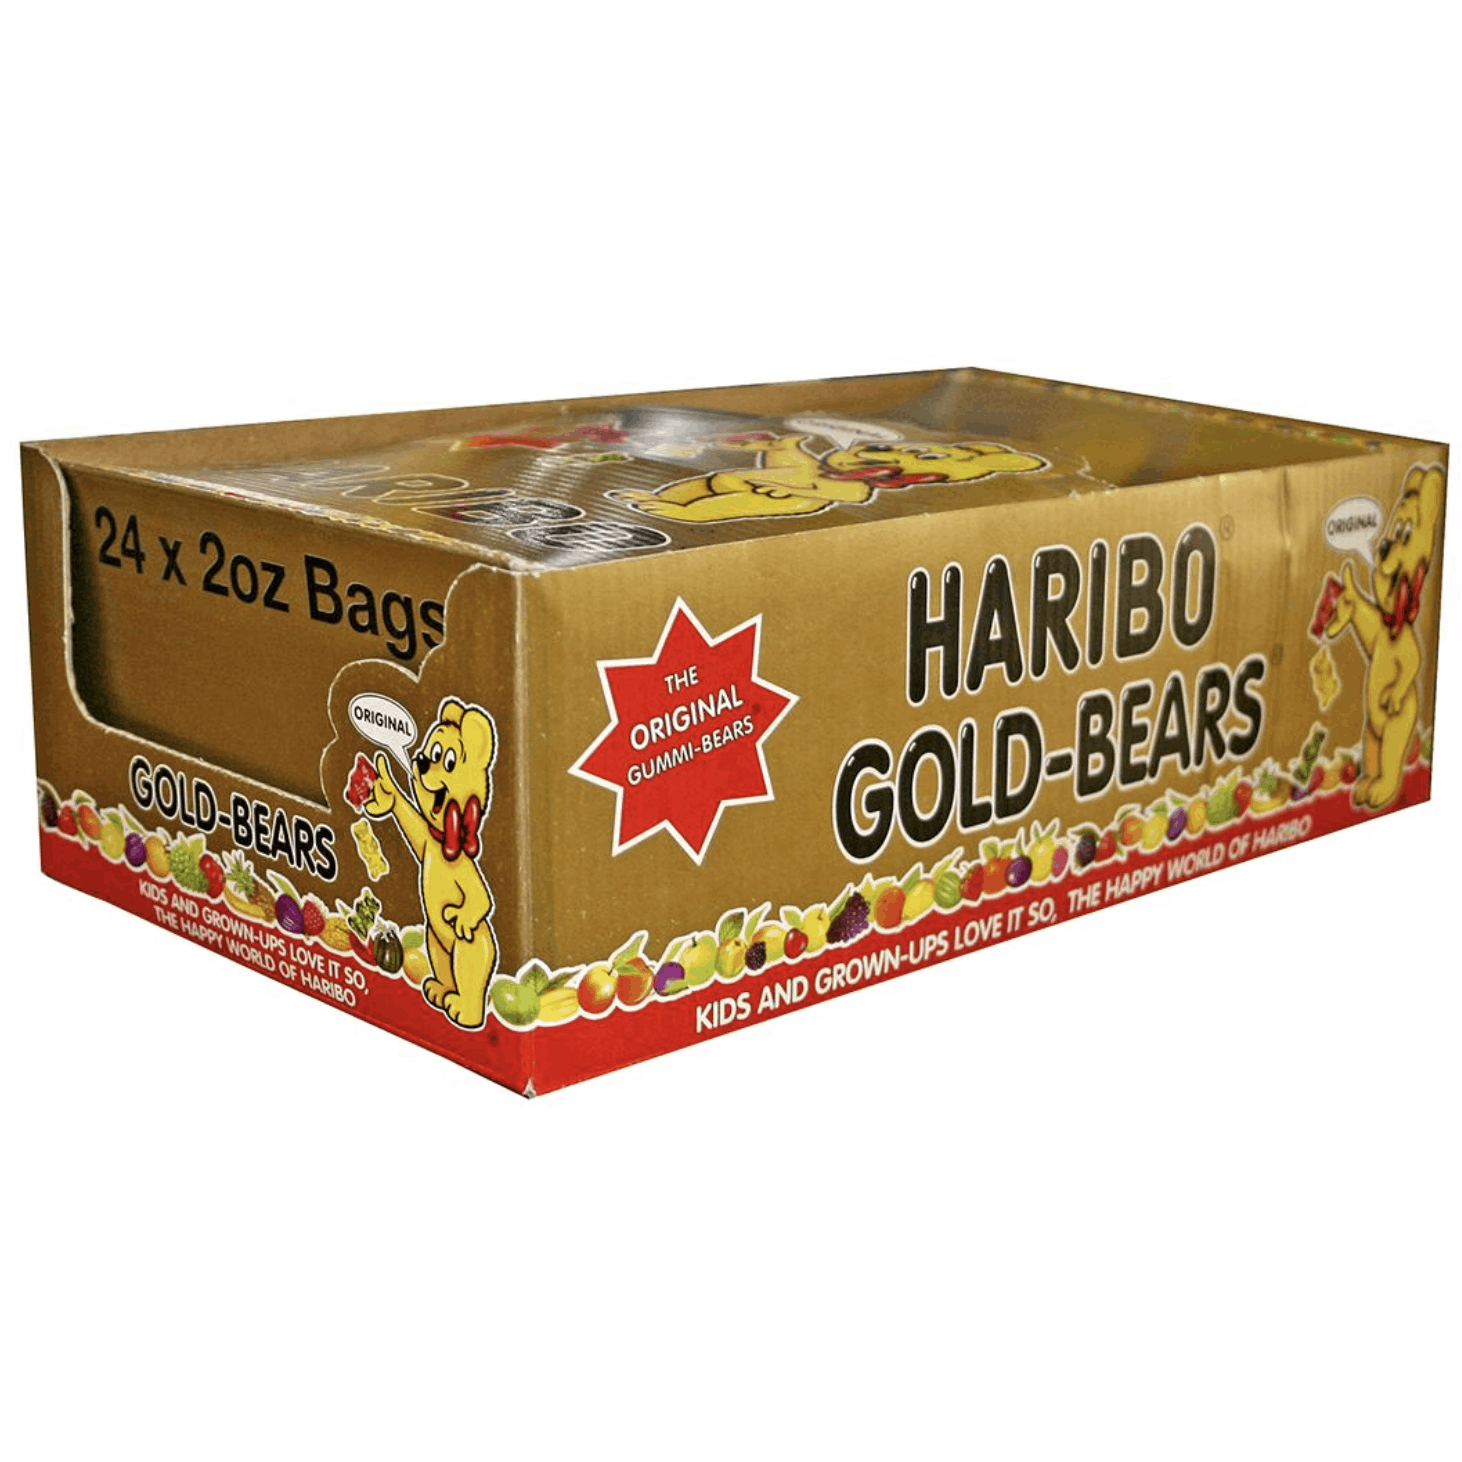 Haribo Gold-Bears, 24 pk./2 oz.